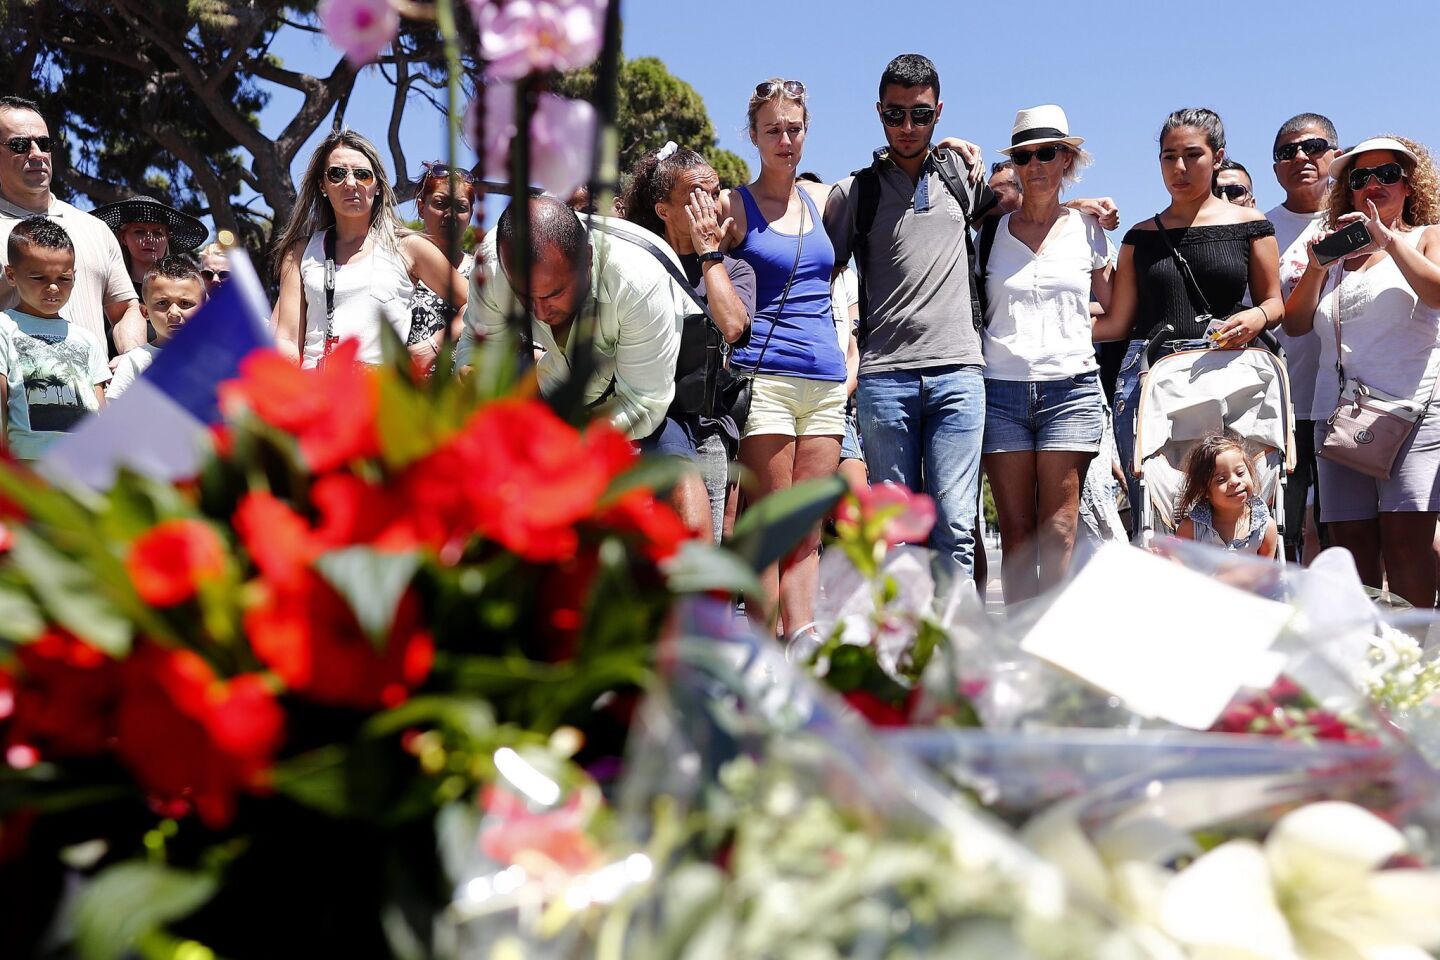 Terrorist attack in Nice, France